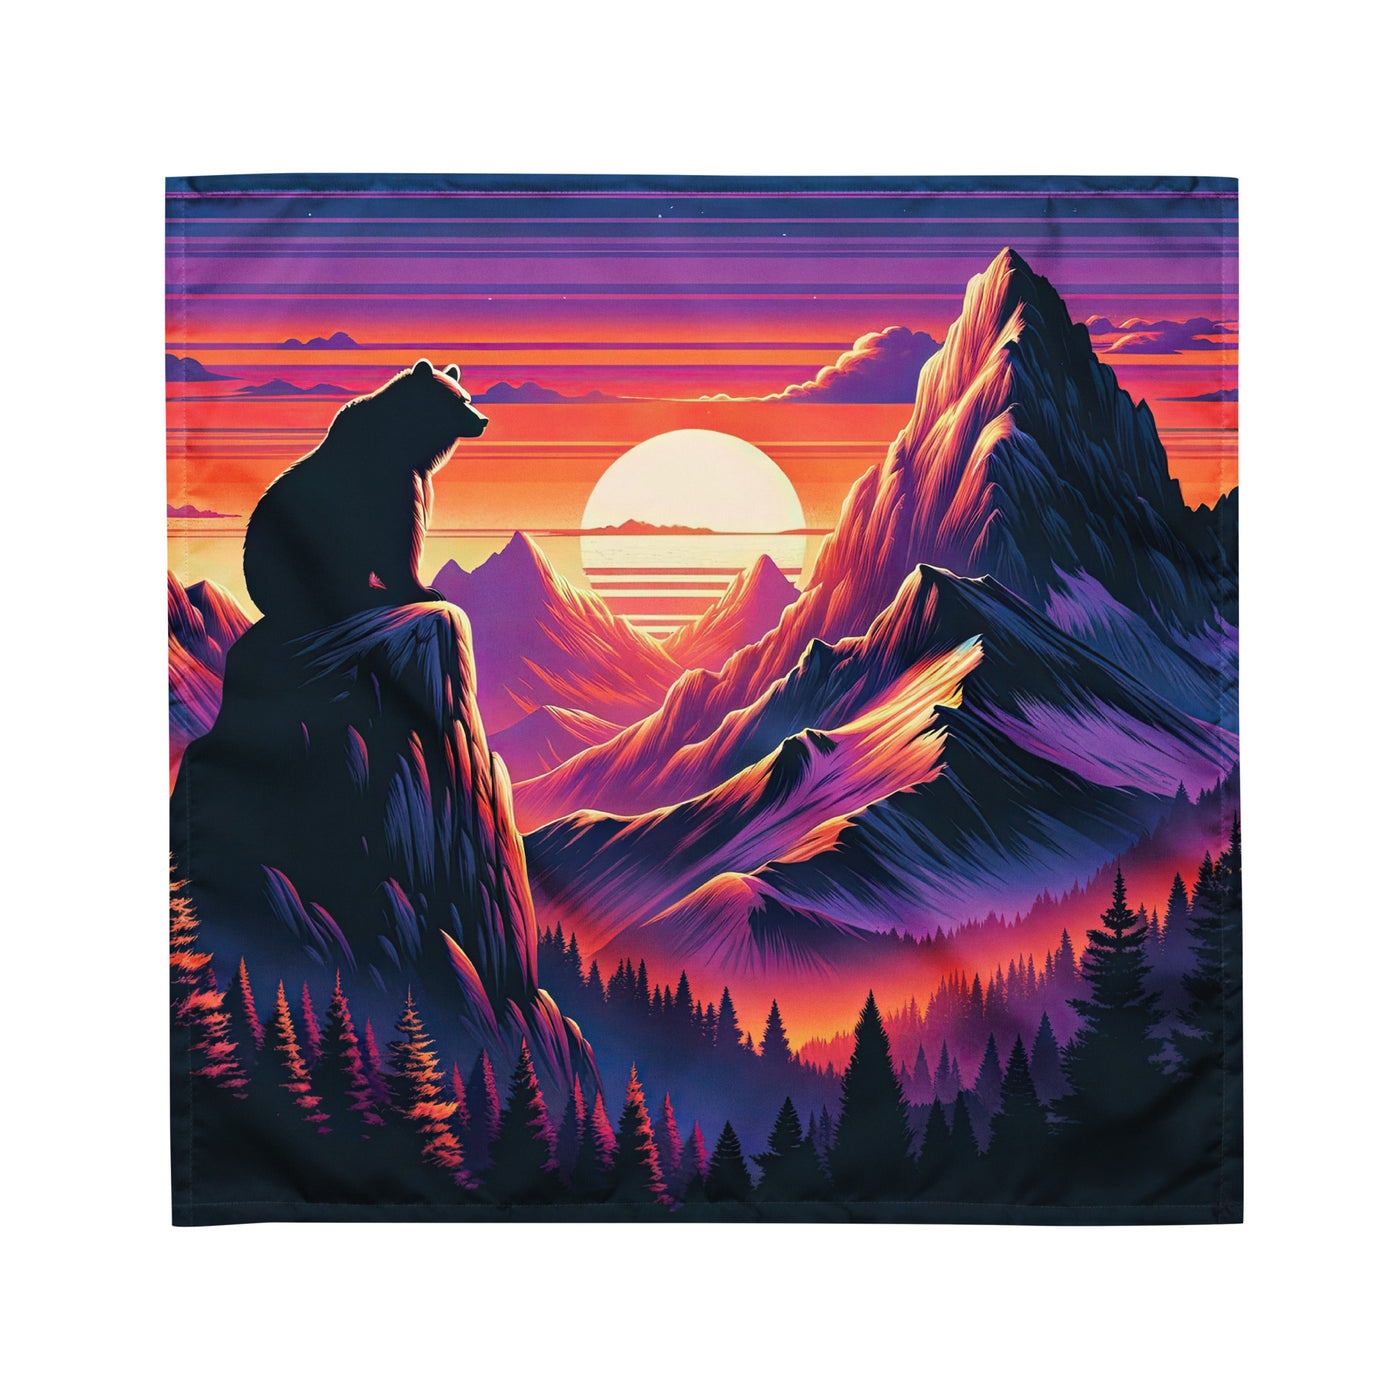 Alpen-Sonnenuntergang mit Bär auf Hügel, warmes Himmelsfarbenspiel - Bandana (All-Over Print) camping xxx yyy zzz M